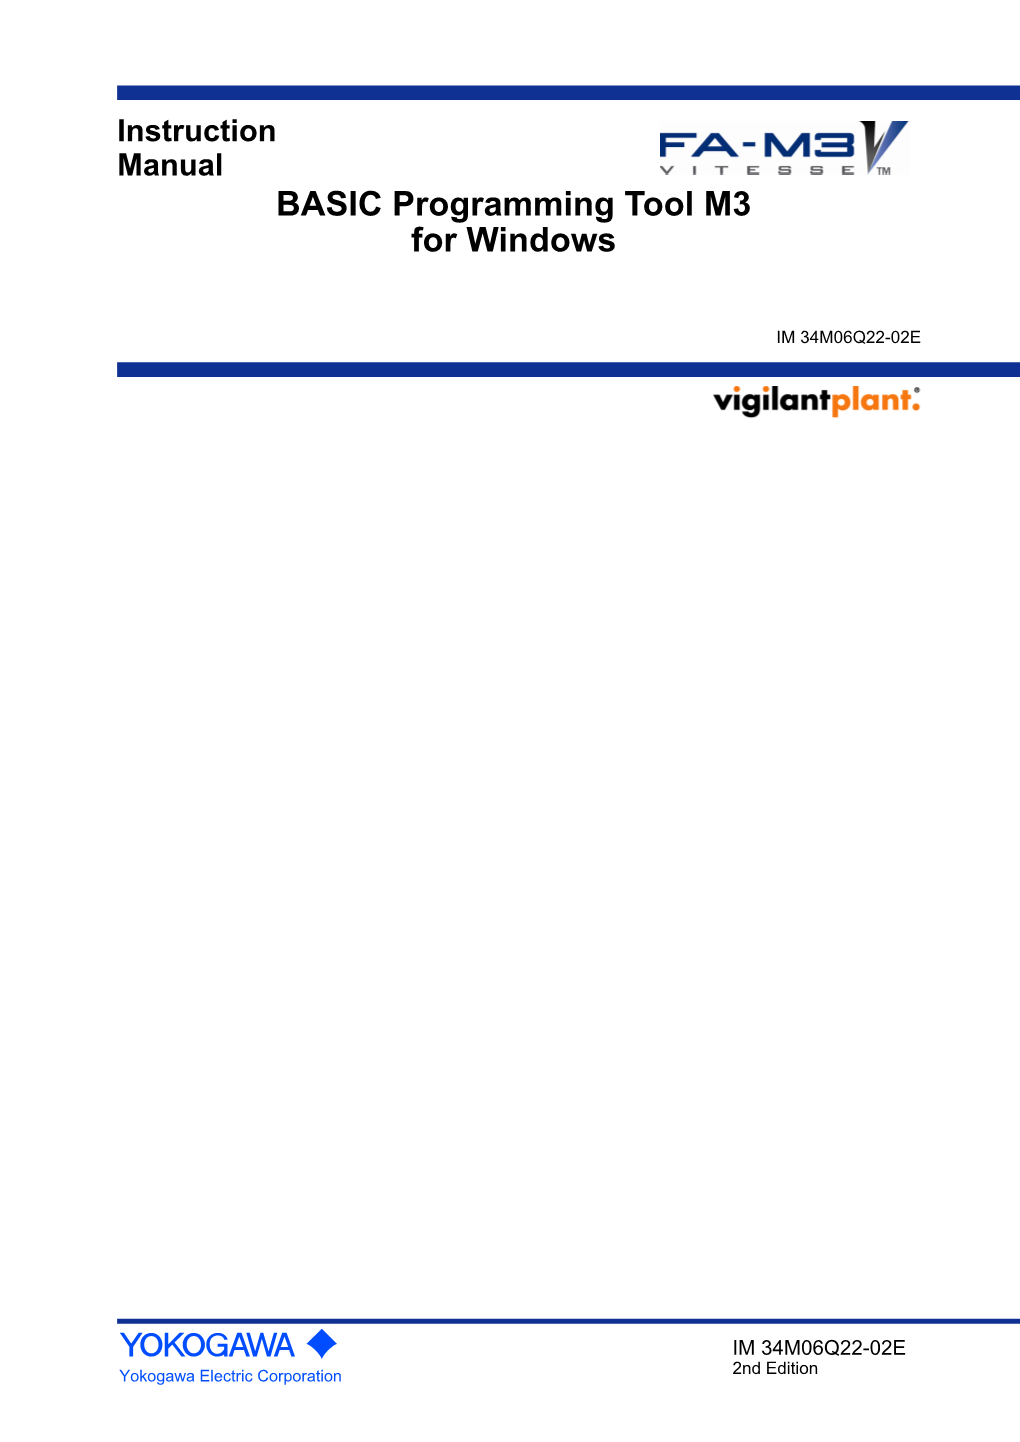 FA-M3 BASIC Programming Tool M3 for Windows Instruction Manual